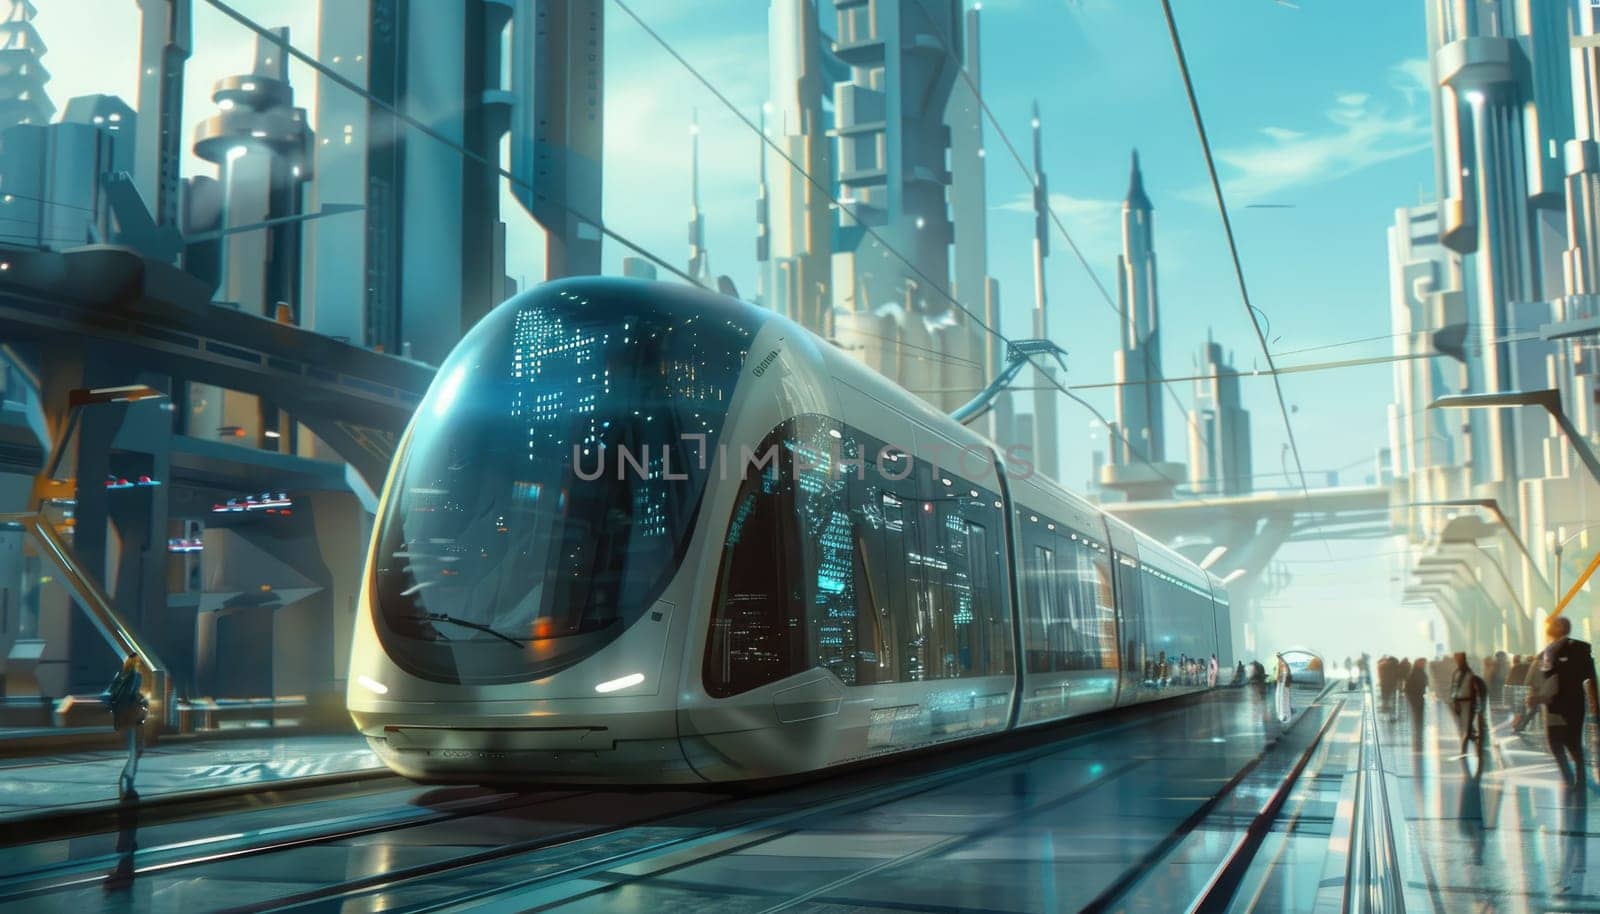 Futuristic city tram rides through the city.